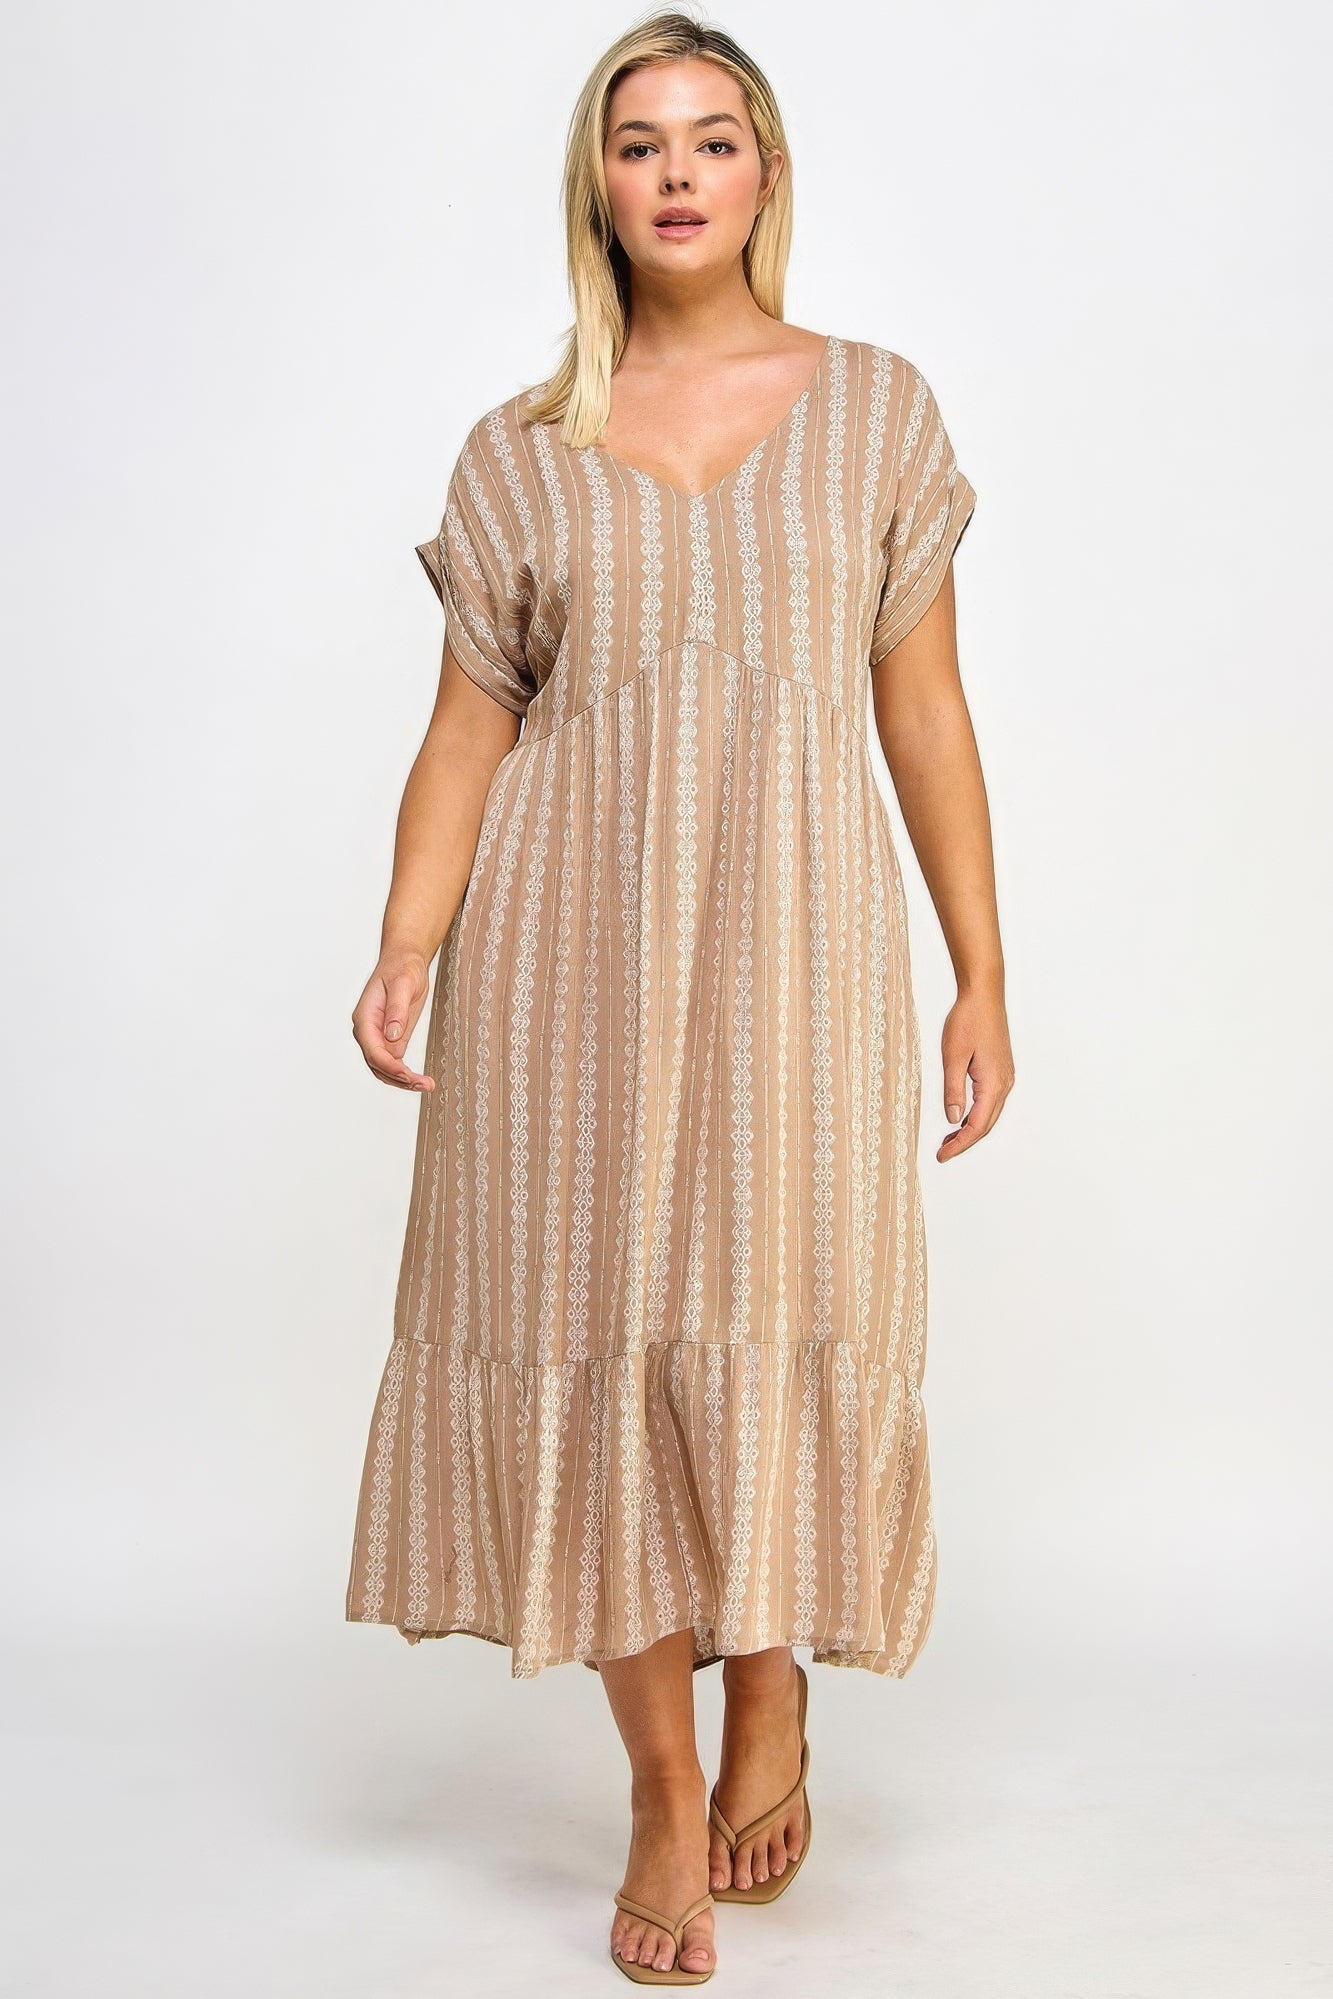 Boho Short-Sleeved Maxi Dress with Slip - Empire Bust & Ruffle Bottom - 100% Polyester - Mocha - Available in 1XL, 2XL, 3XL